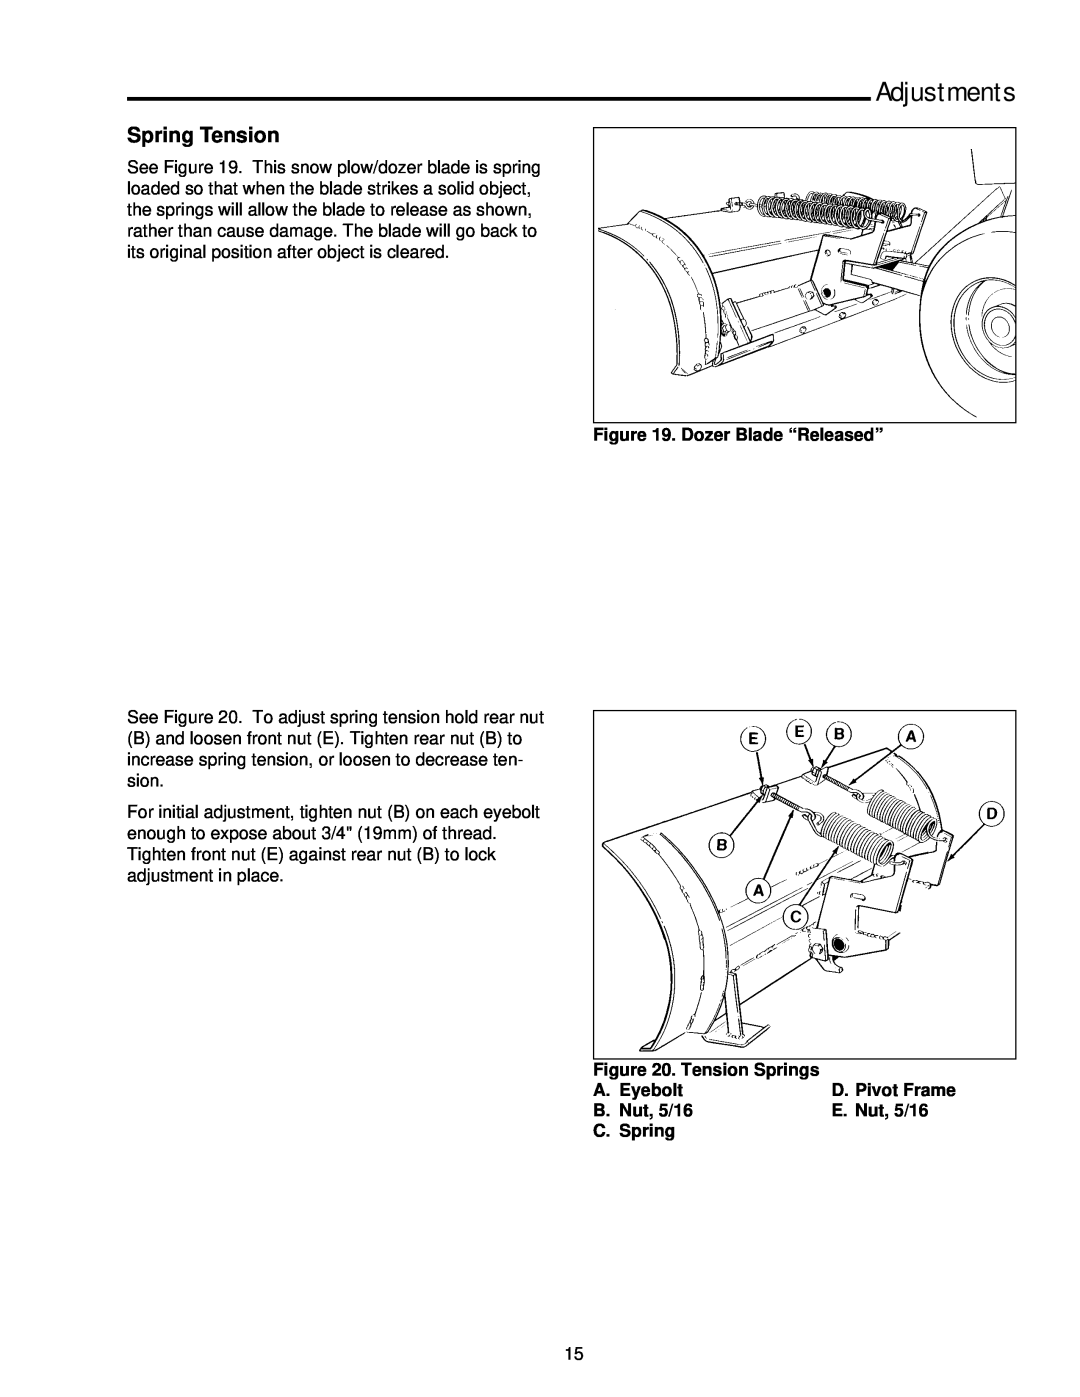 Simplicity 1691620 manual Spring Tension, Dozer Blade “Released”, Tension Springs, Adjustments, A. Eyebolt, D. Pivot Frame 